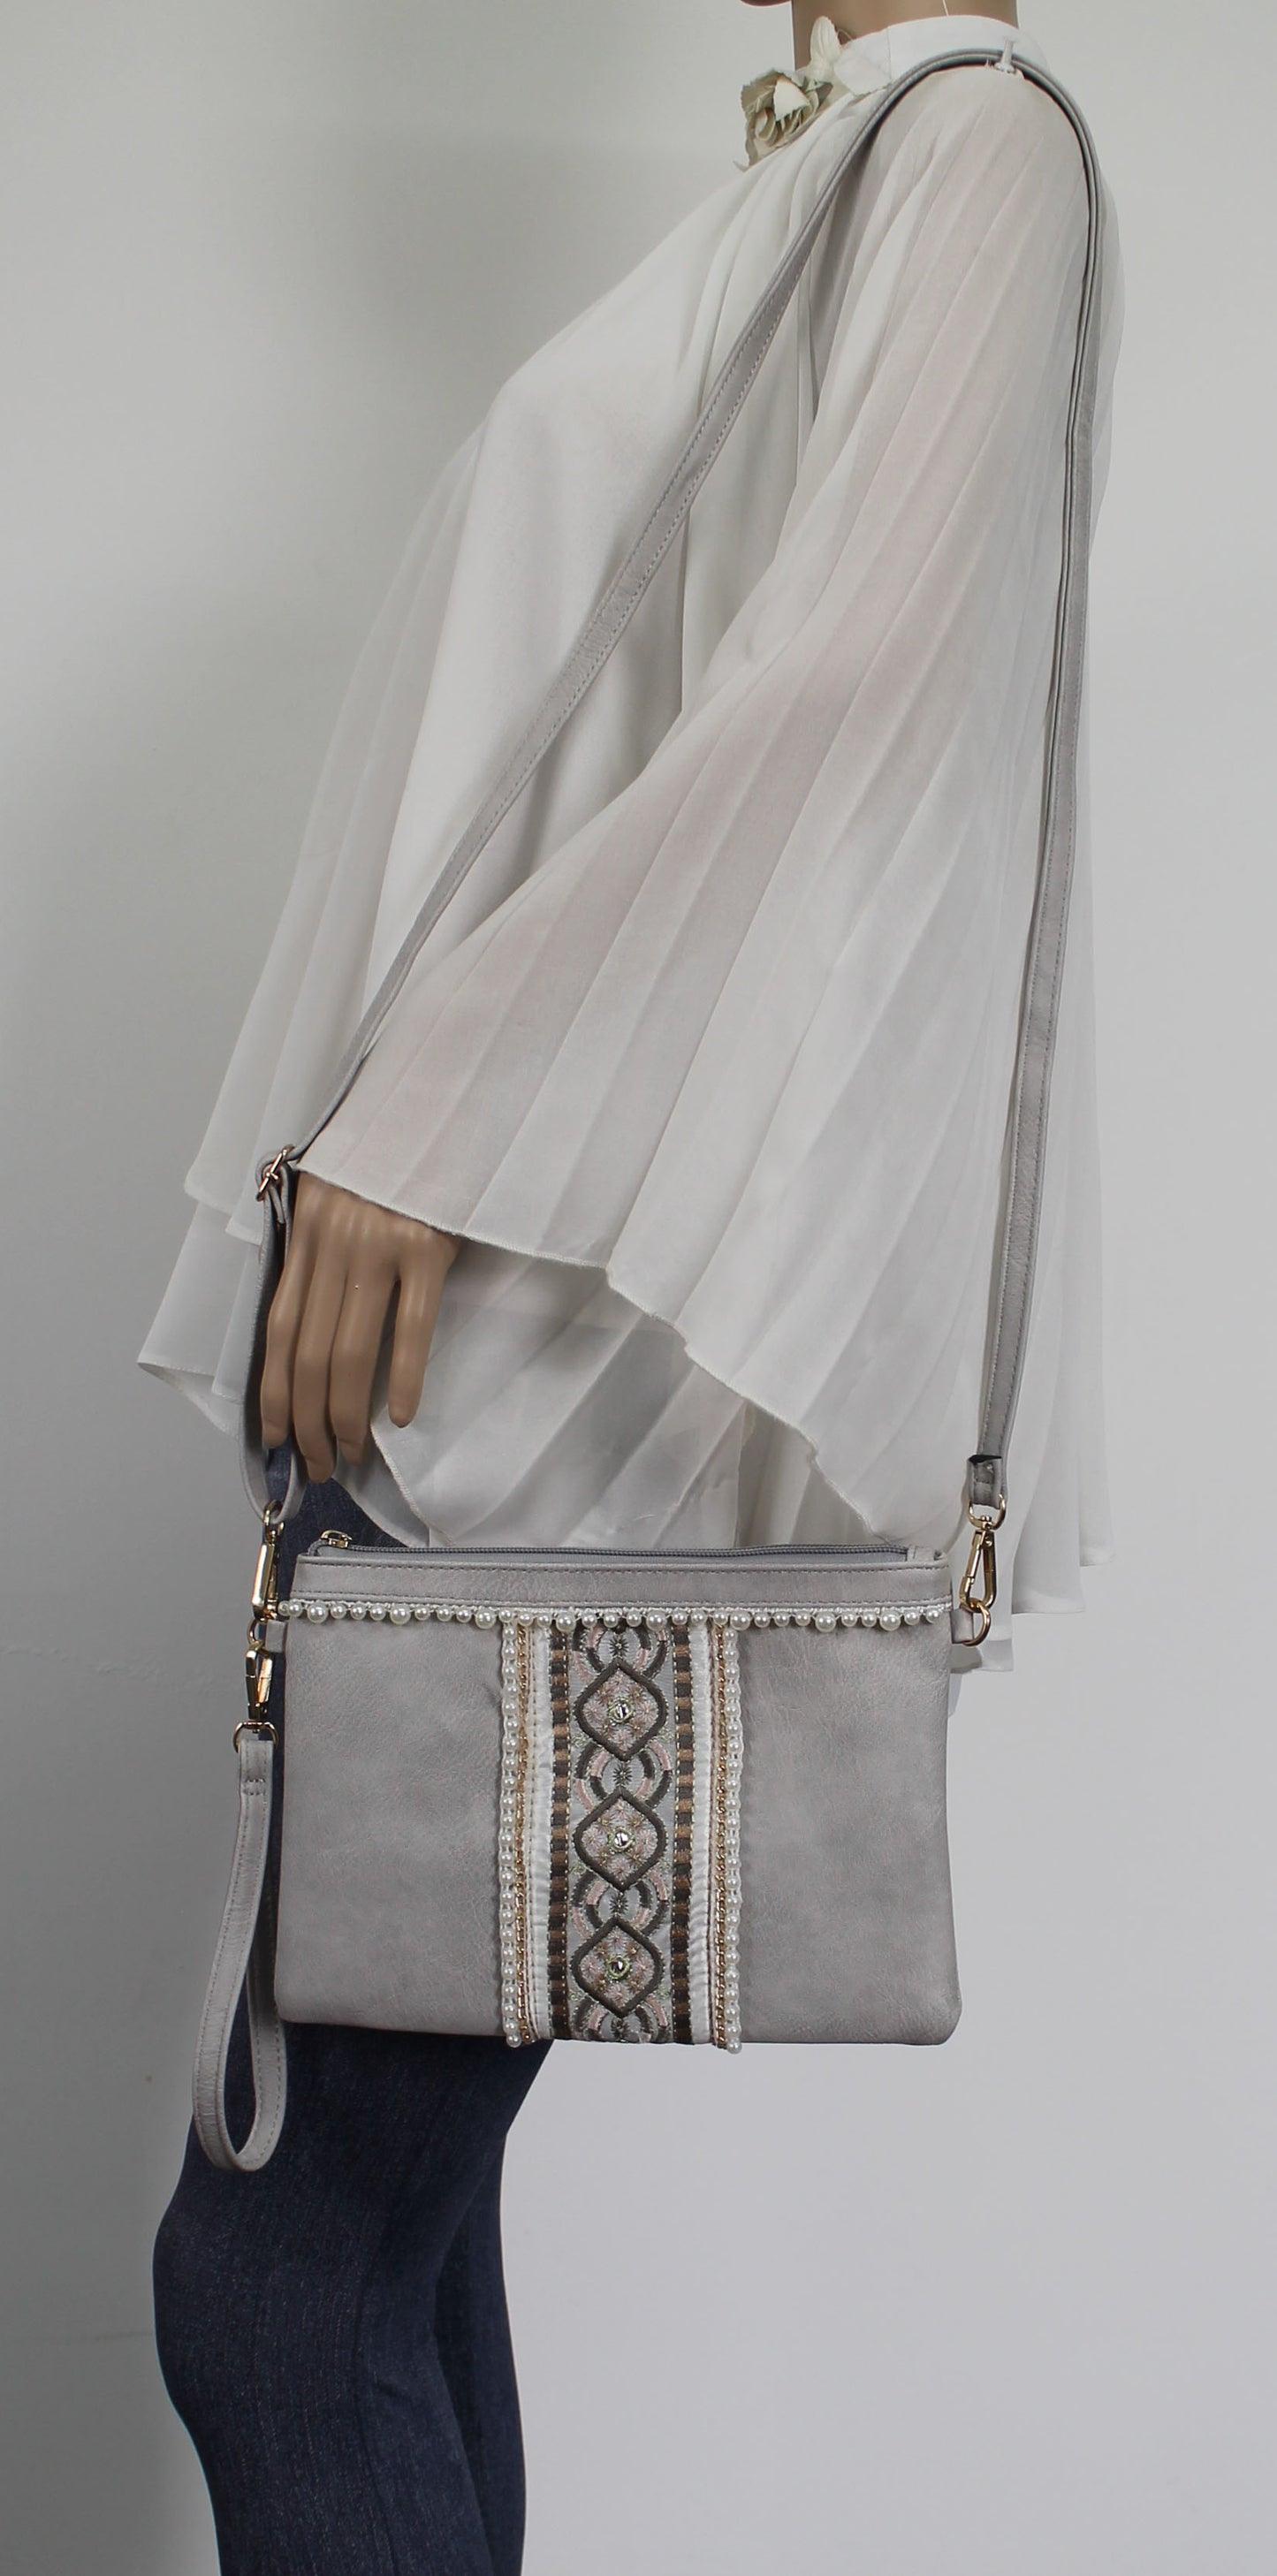 SWANKYSWANS Delilah Clutch Bag Neutral Grey Cute Cheap Clutch Bag For Weddings School and Work